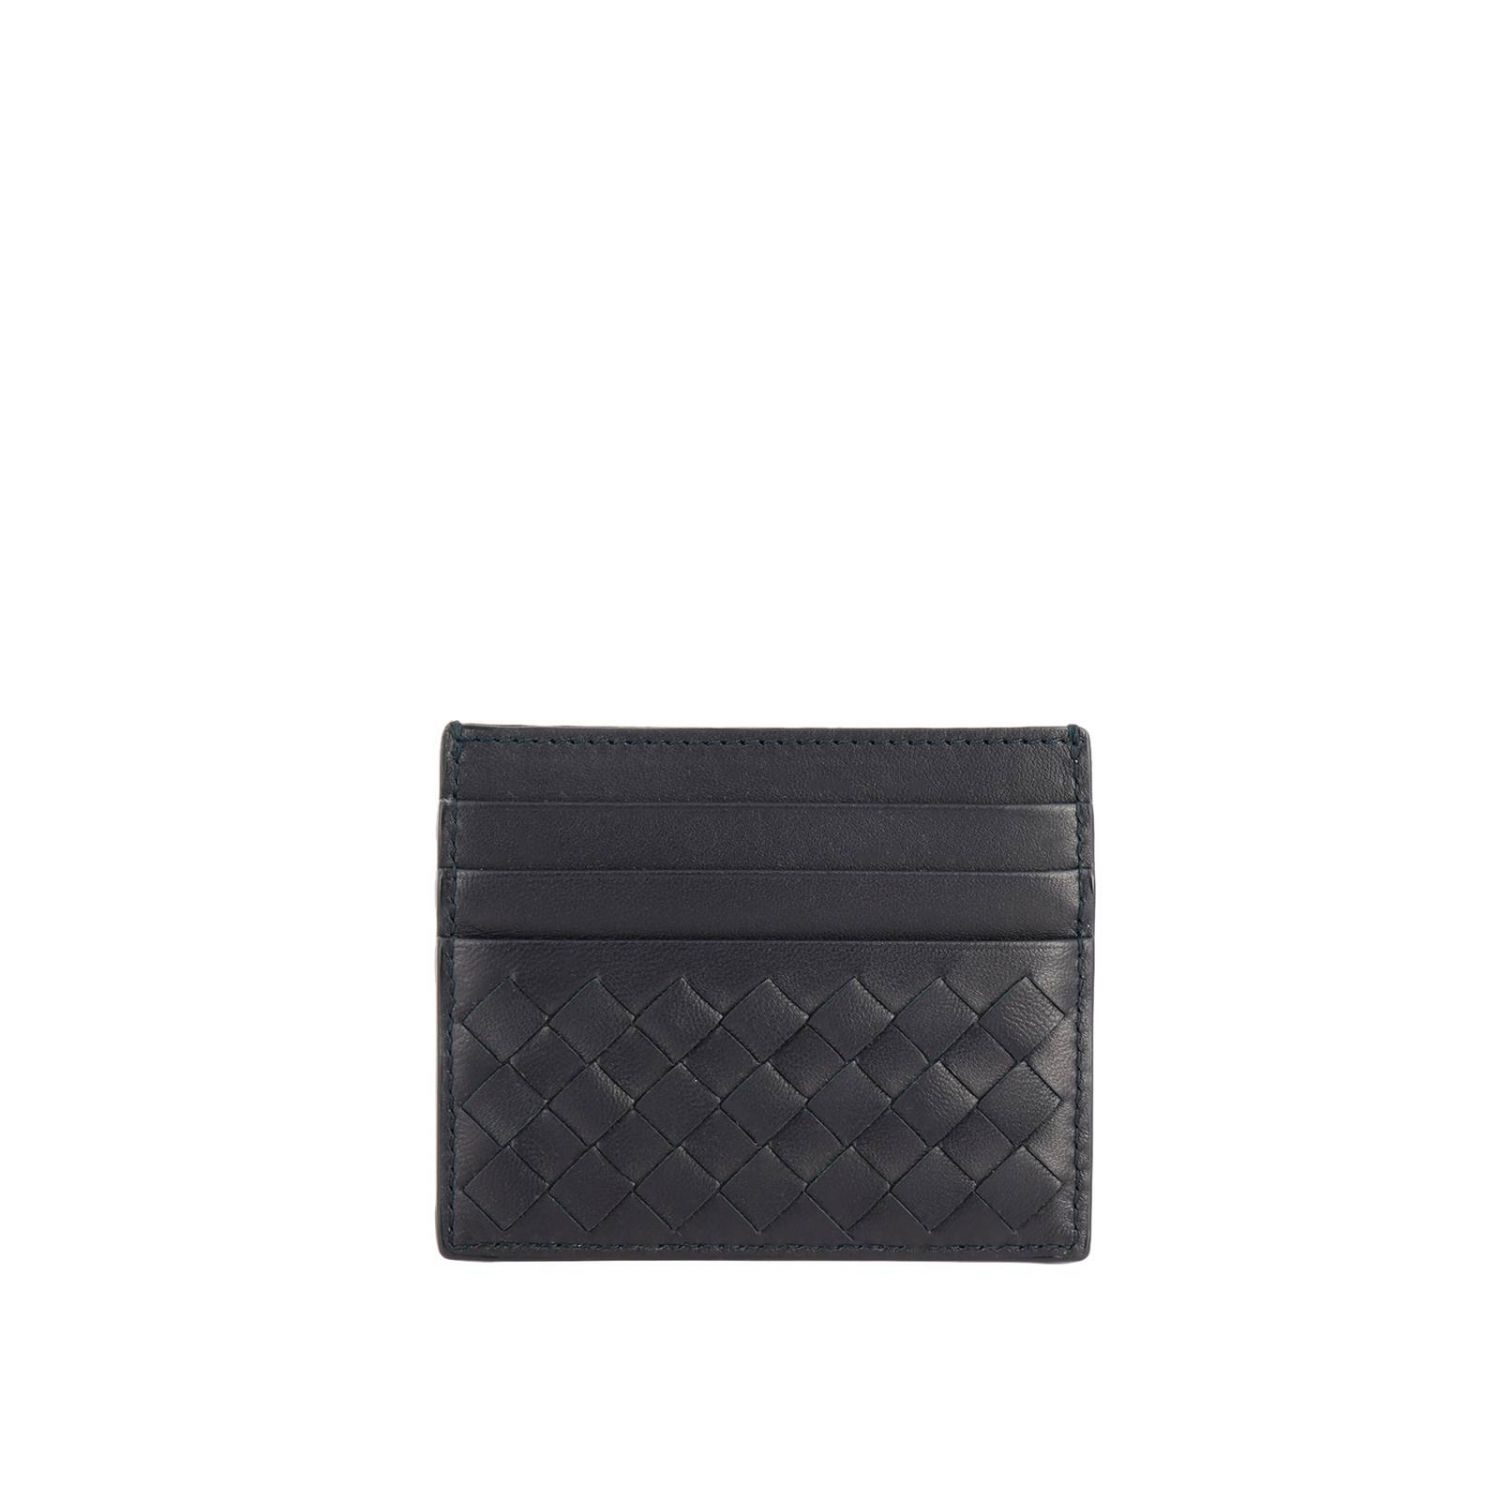 Bottega Veneta Outlet: card holder in woven leather | Wallet Bottega ...